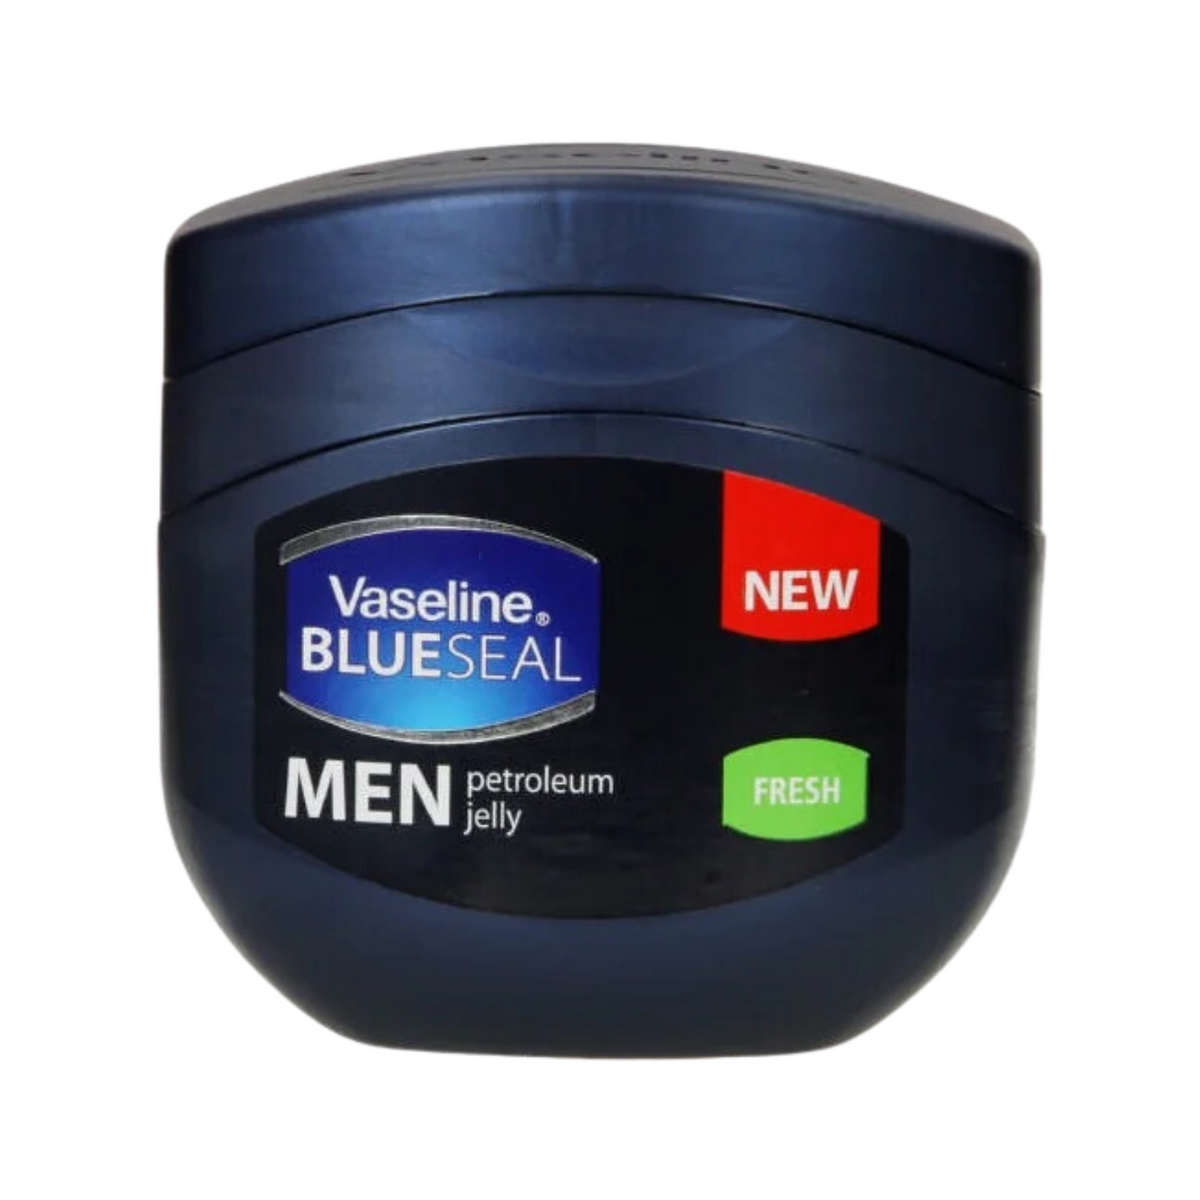 vaseline-blue-seal-men-petroleum-jelly-fresh-100ml